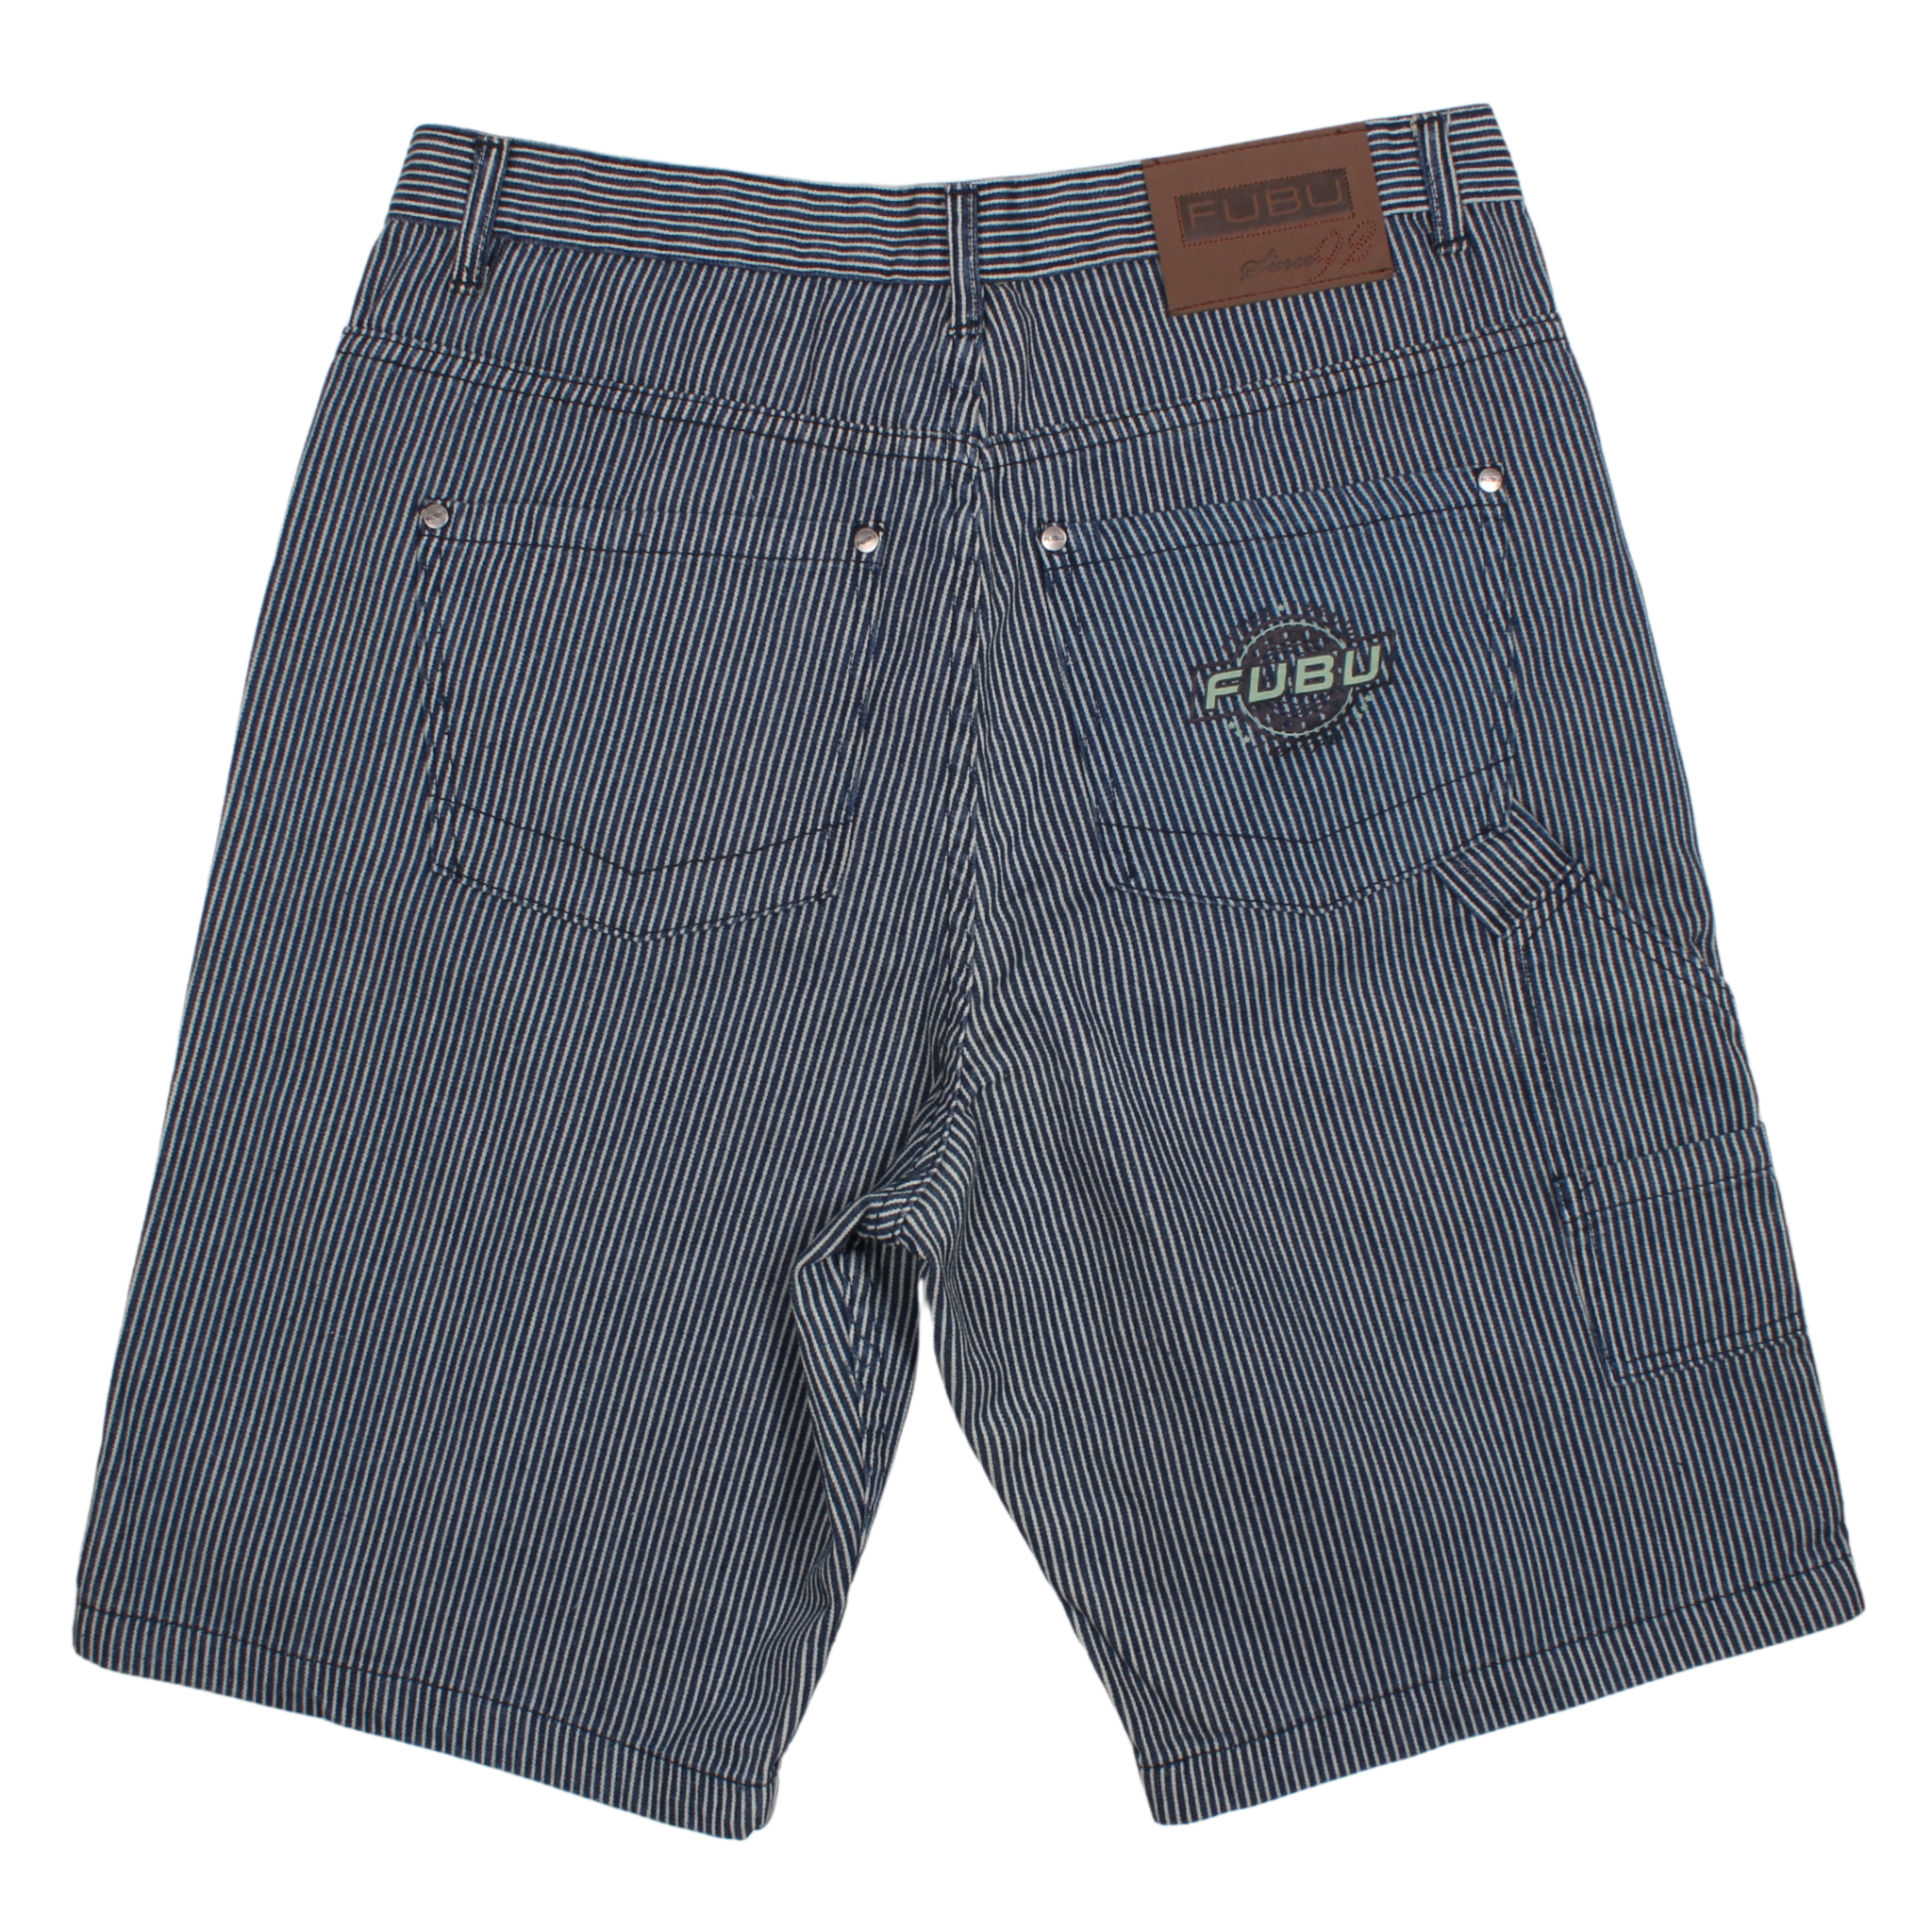 Vintage Fubu Denim Shorts (34